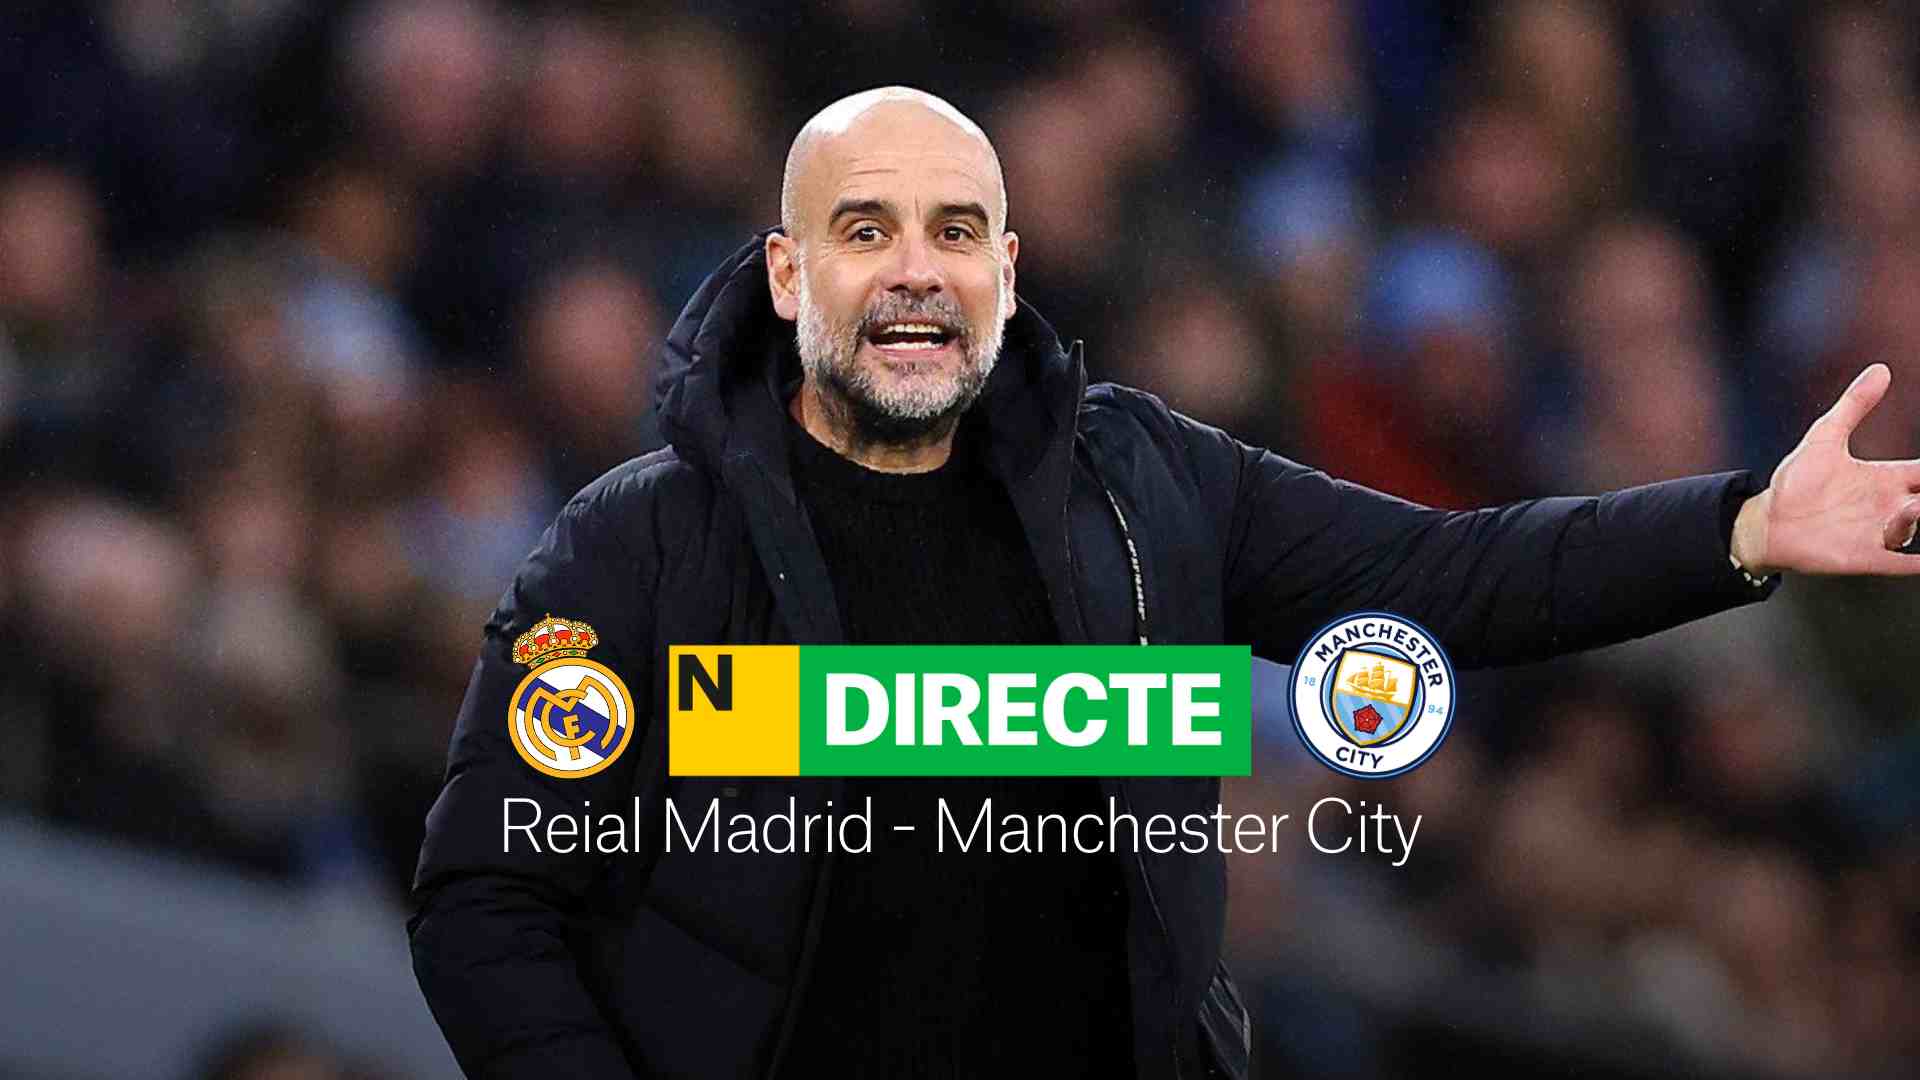 Reial Madrid - Manchester City de la Champions League, DIRECTE | Resultat, resum i gols